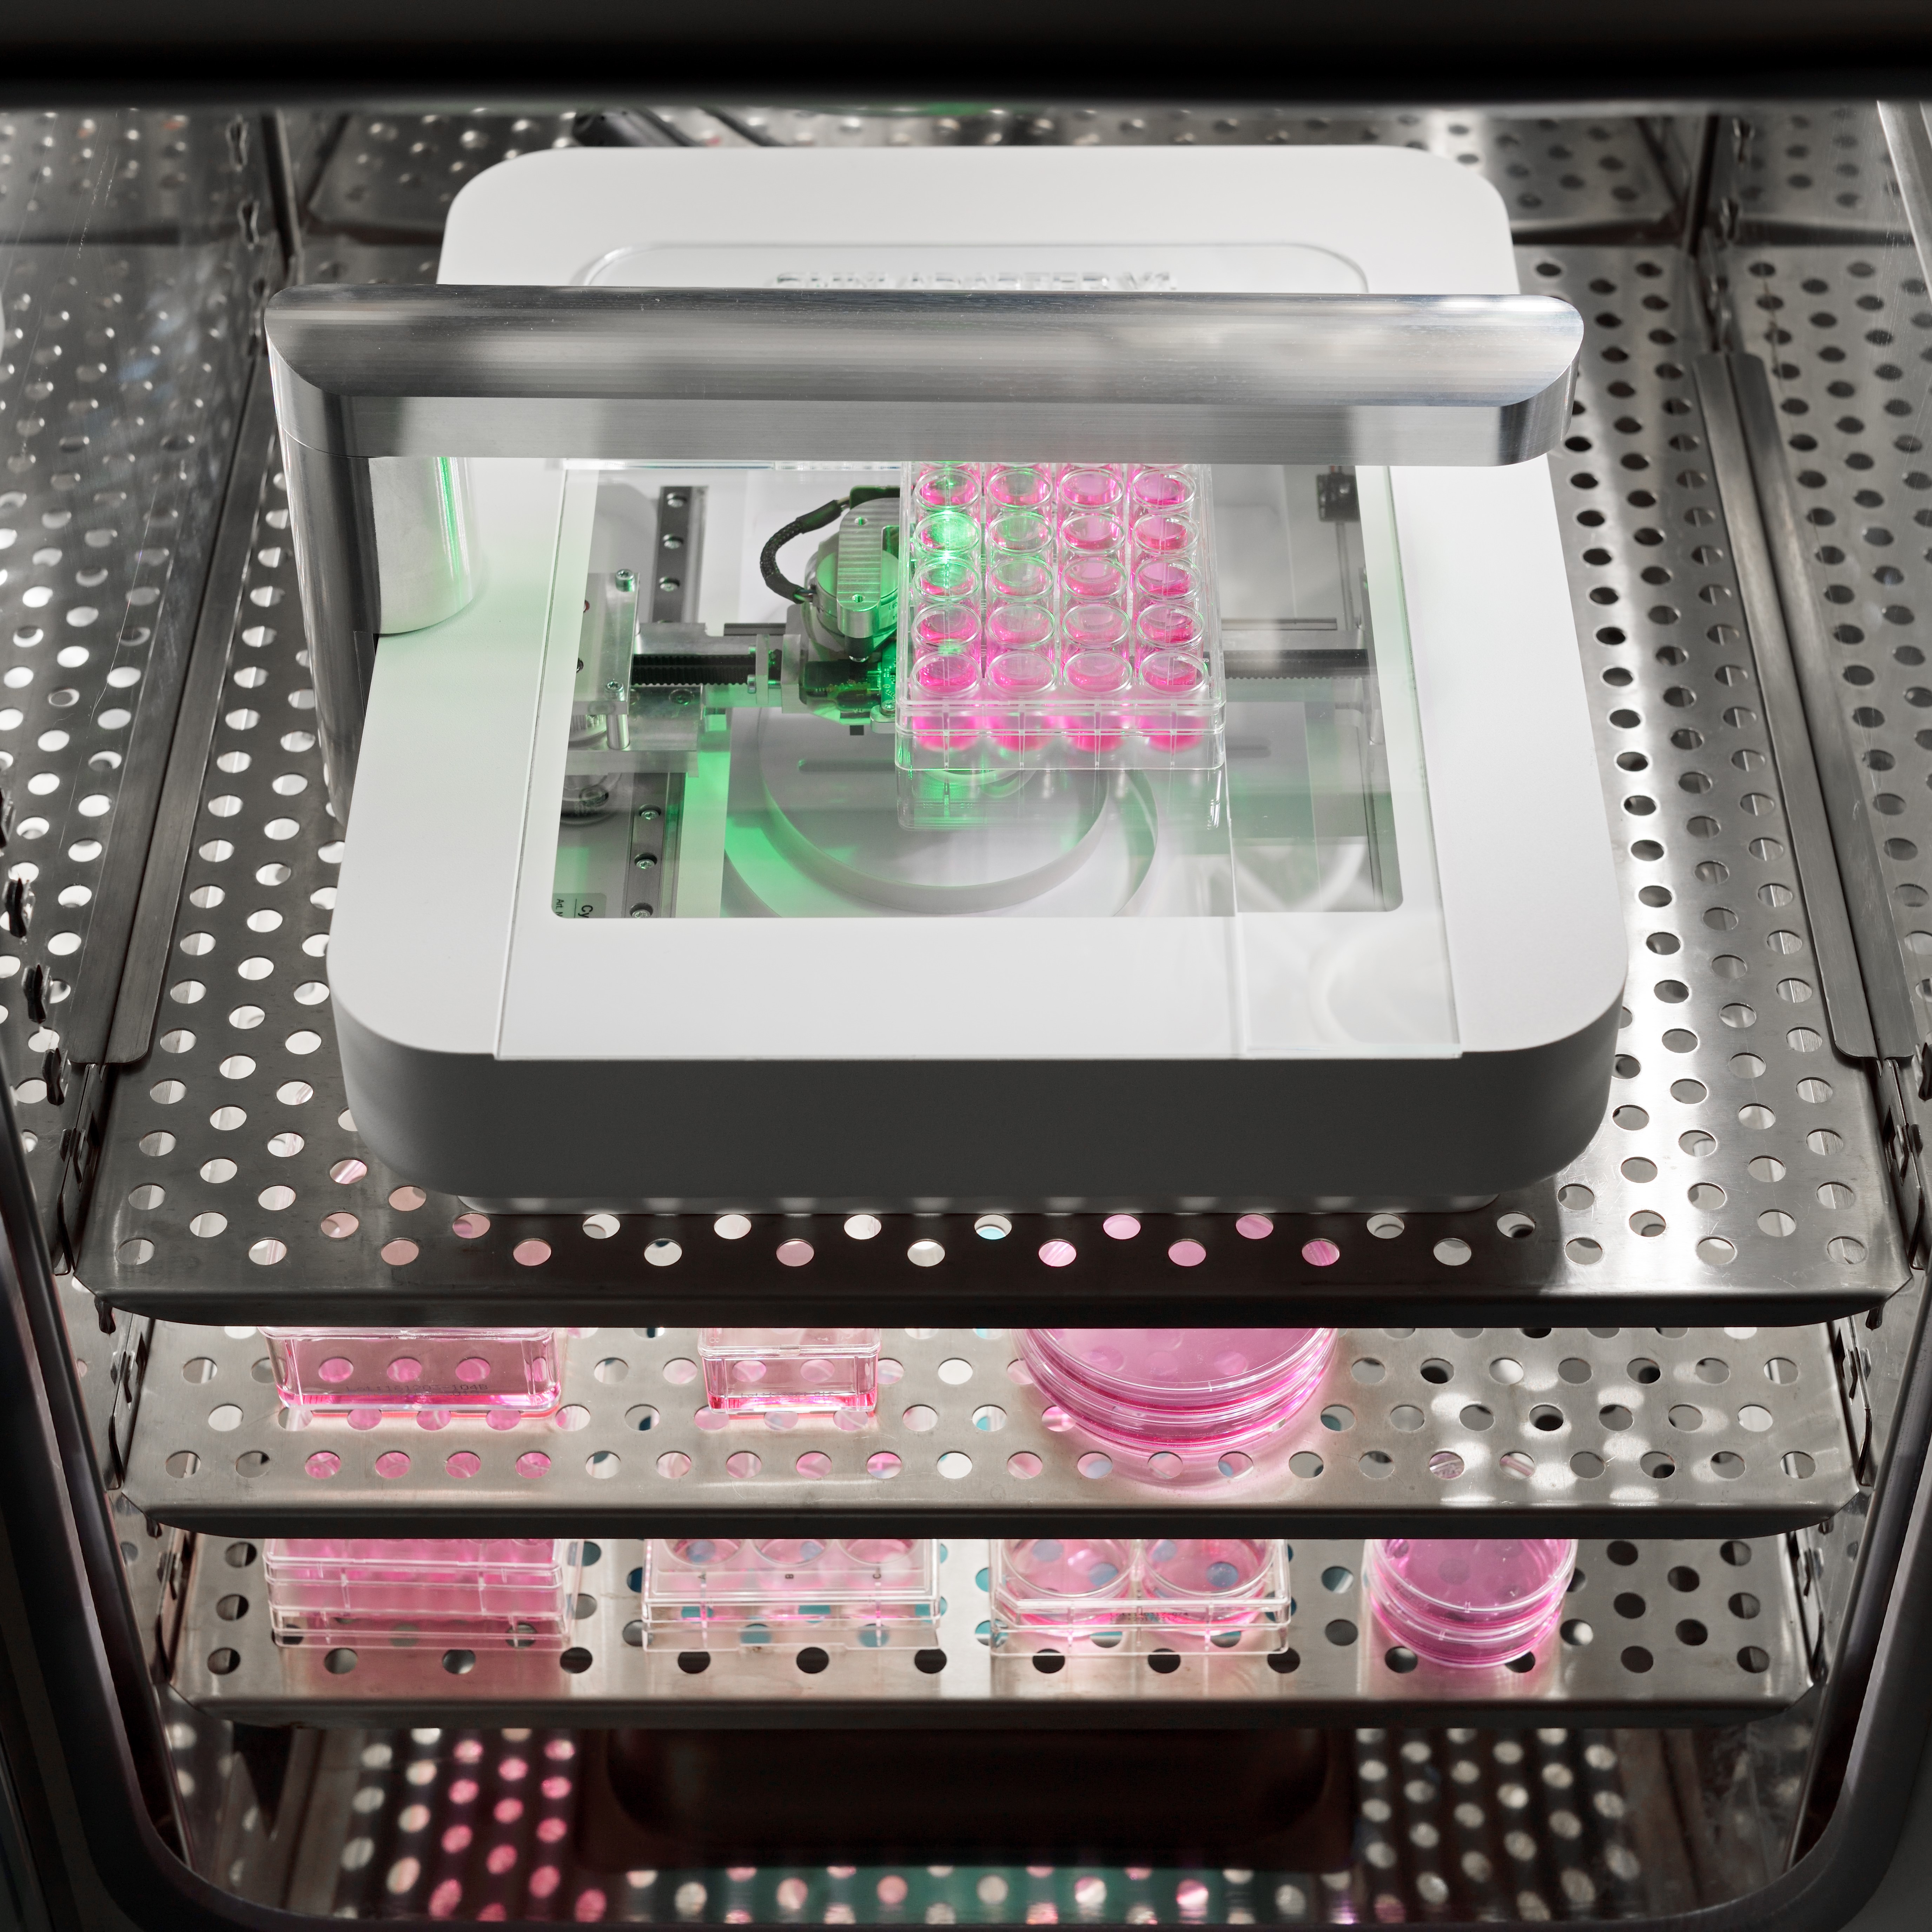 CytoSMART Omni inside an incubator